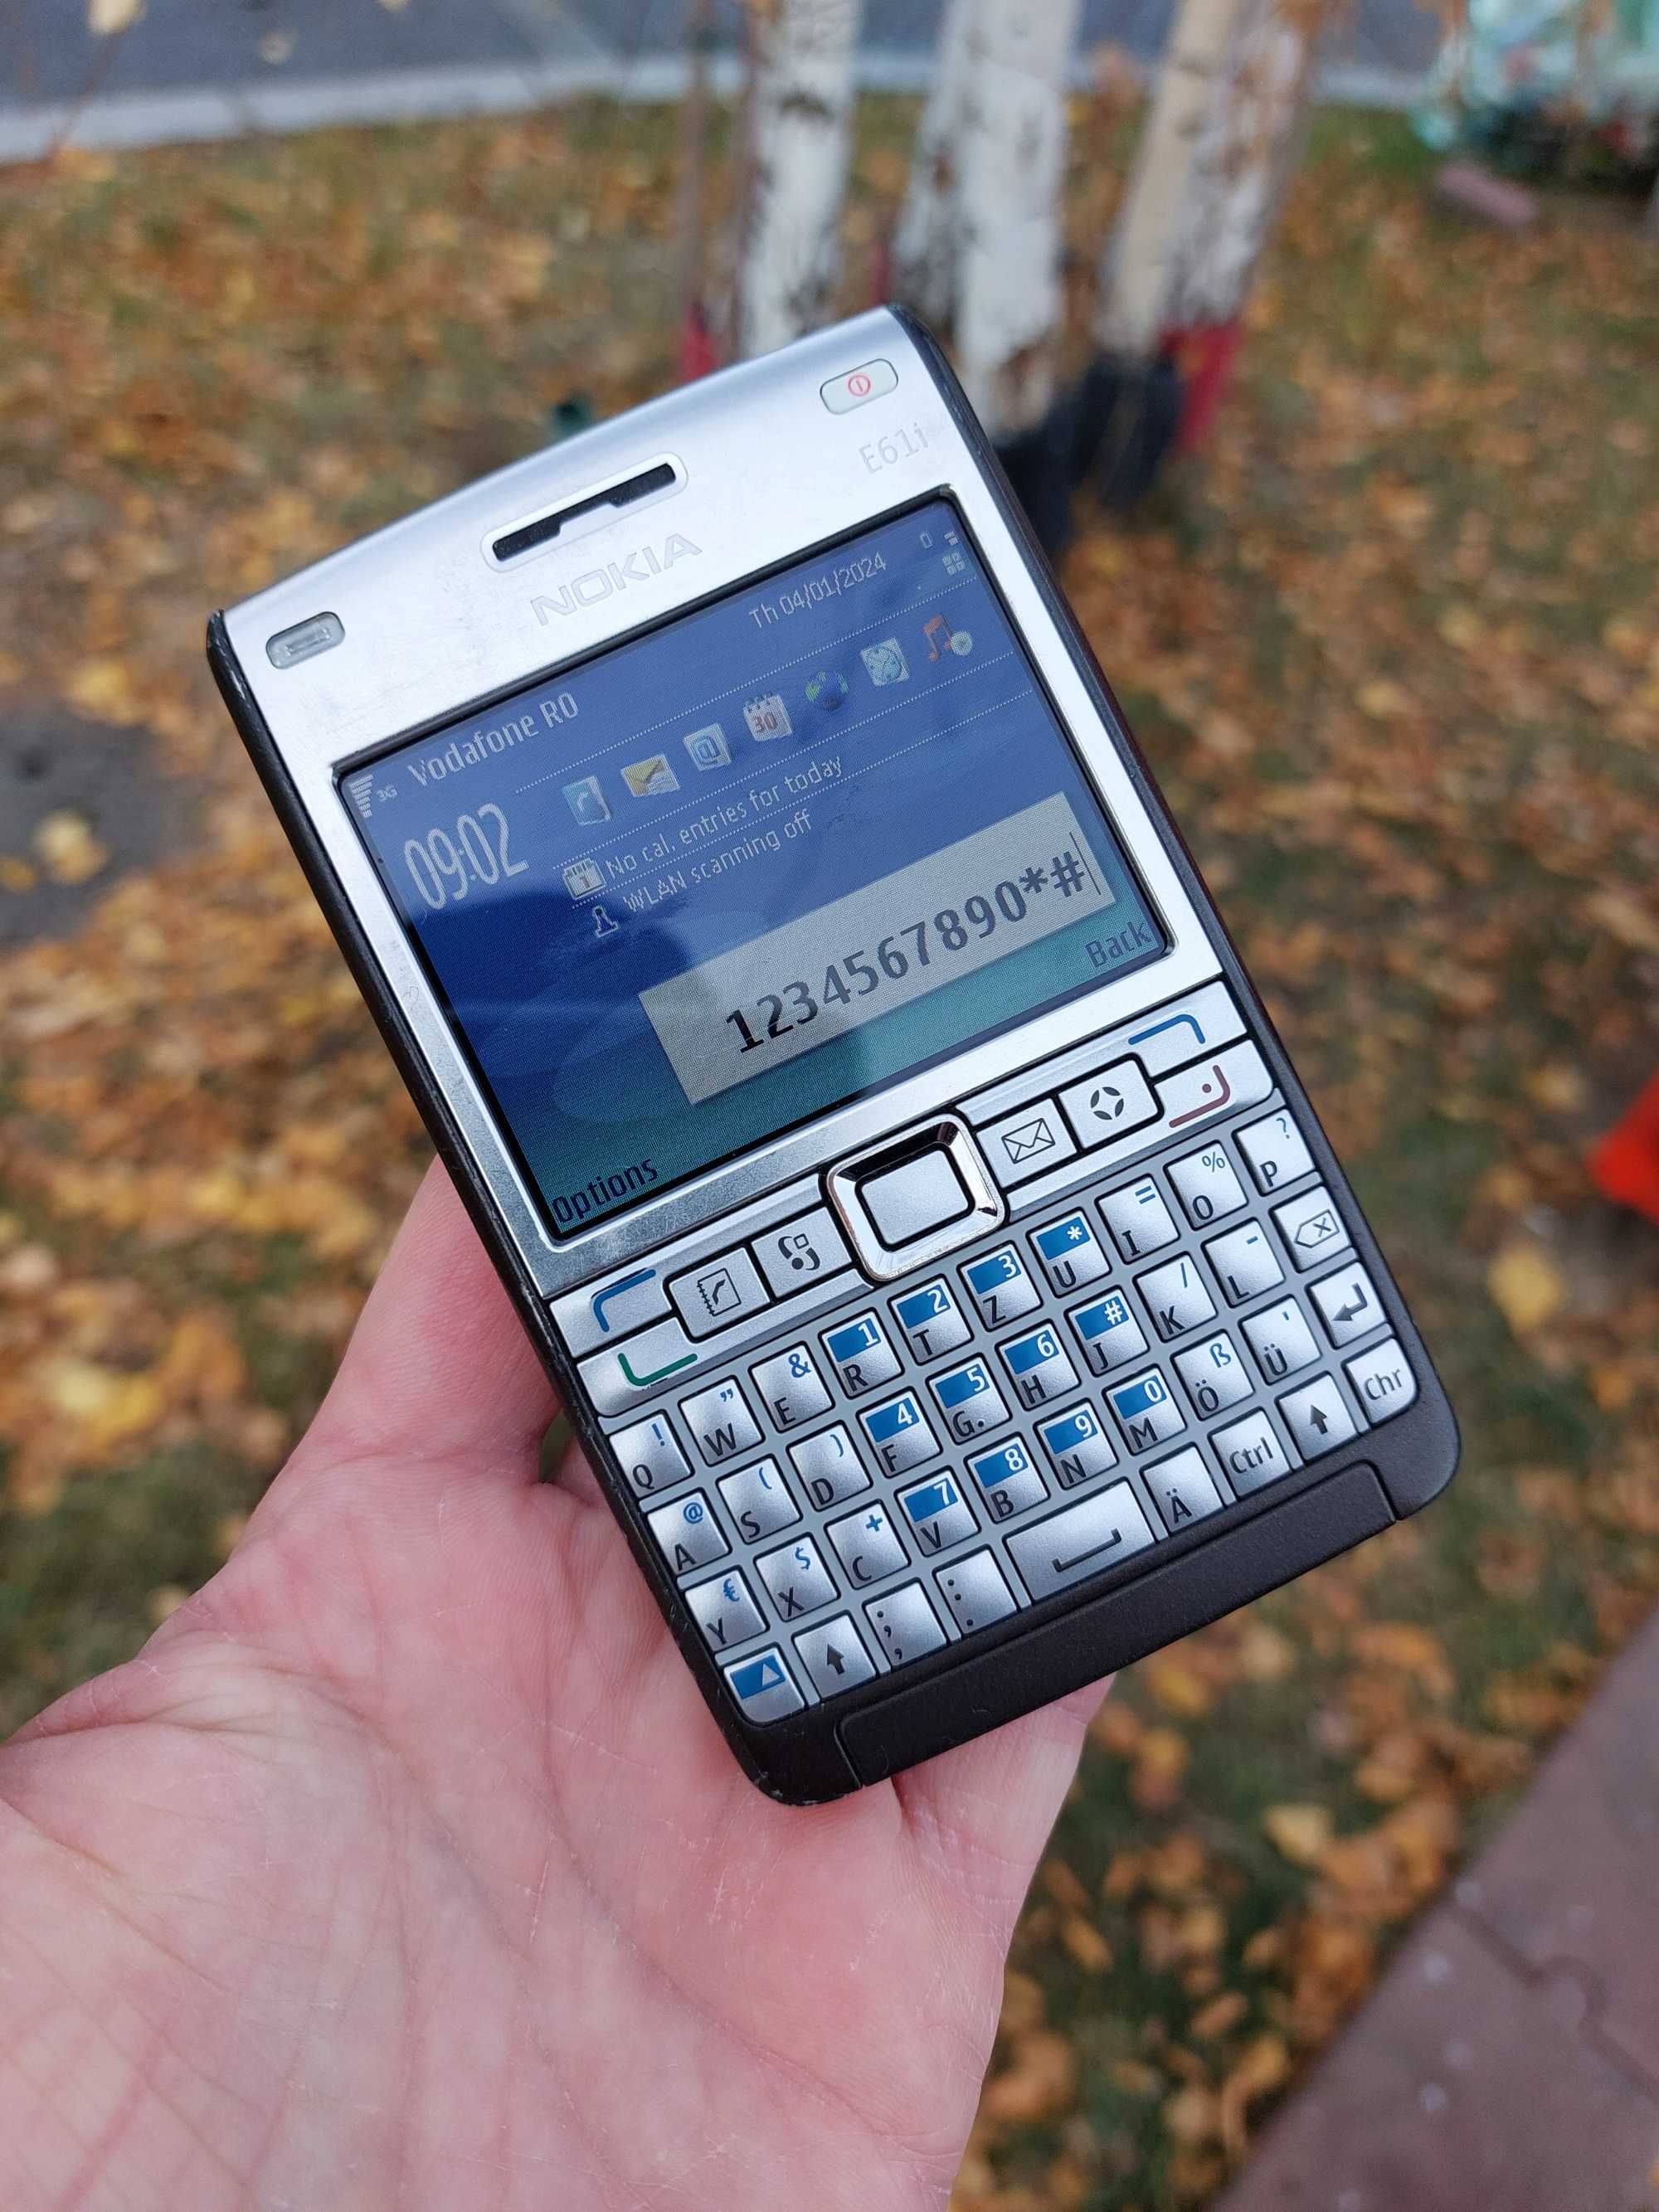 Nokia e61i orig. Finlanda decodat perfect functional si bine conservat